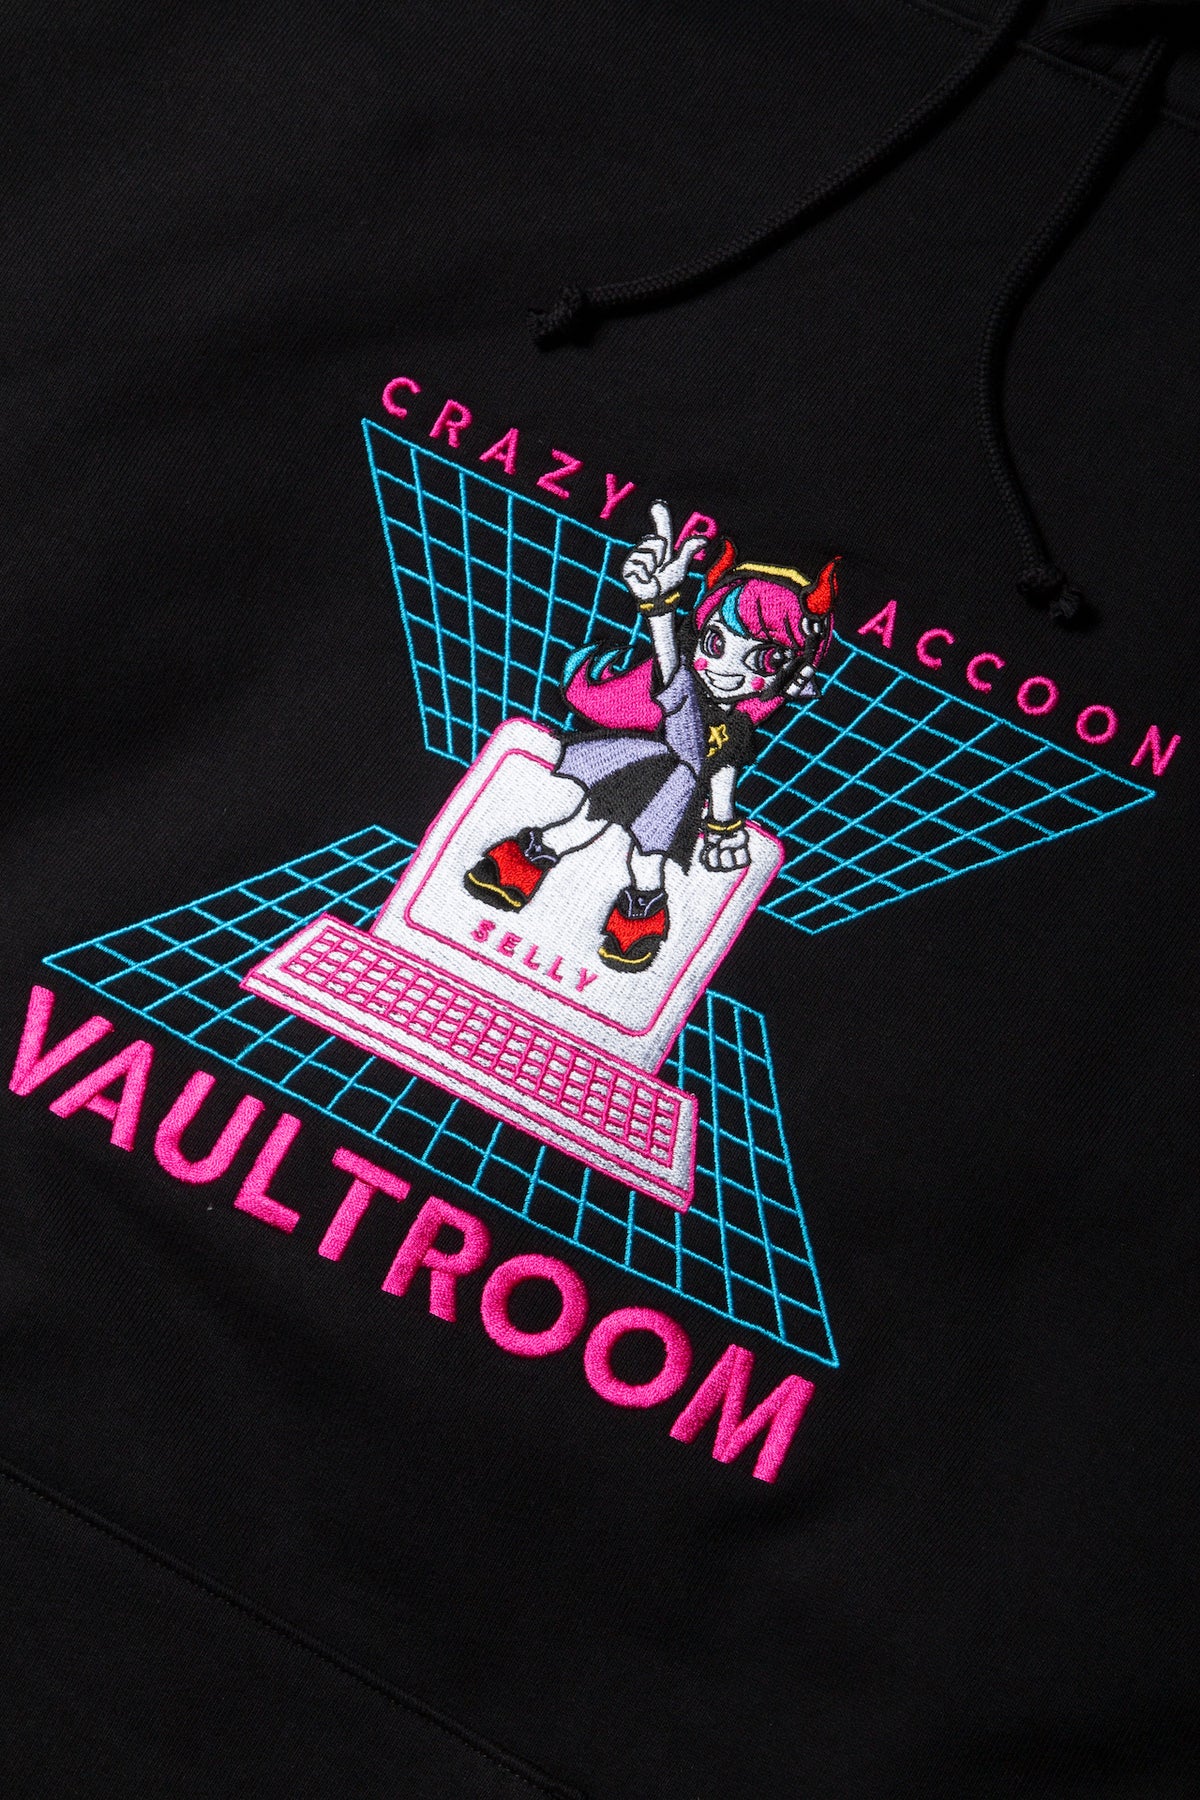 CR RAS vaultroom パーカー XL - パーカー